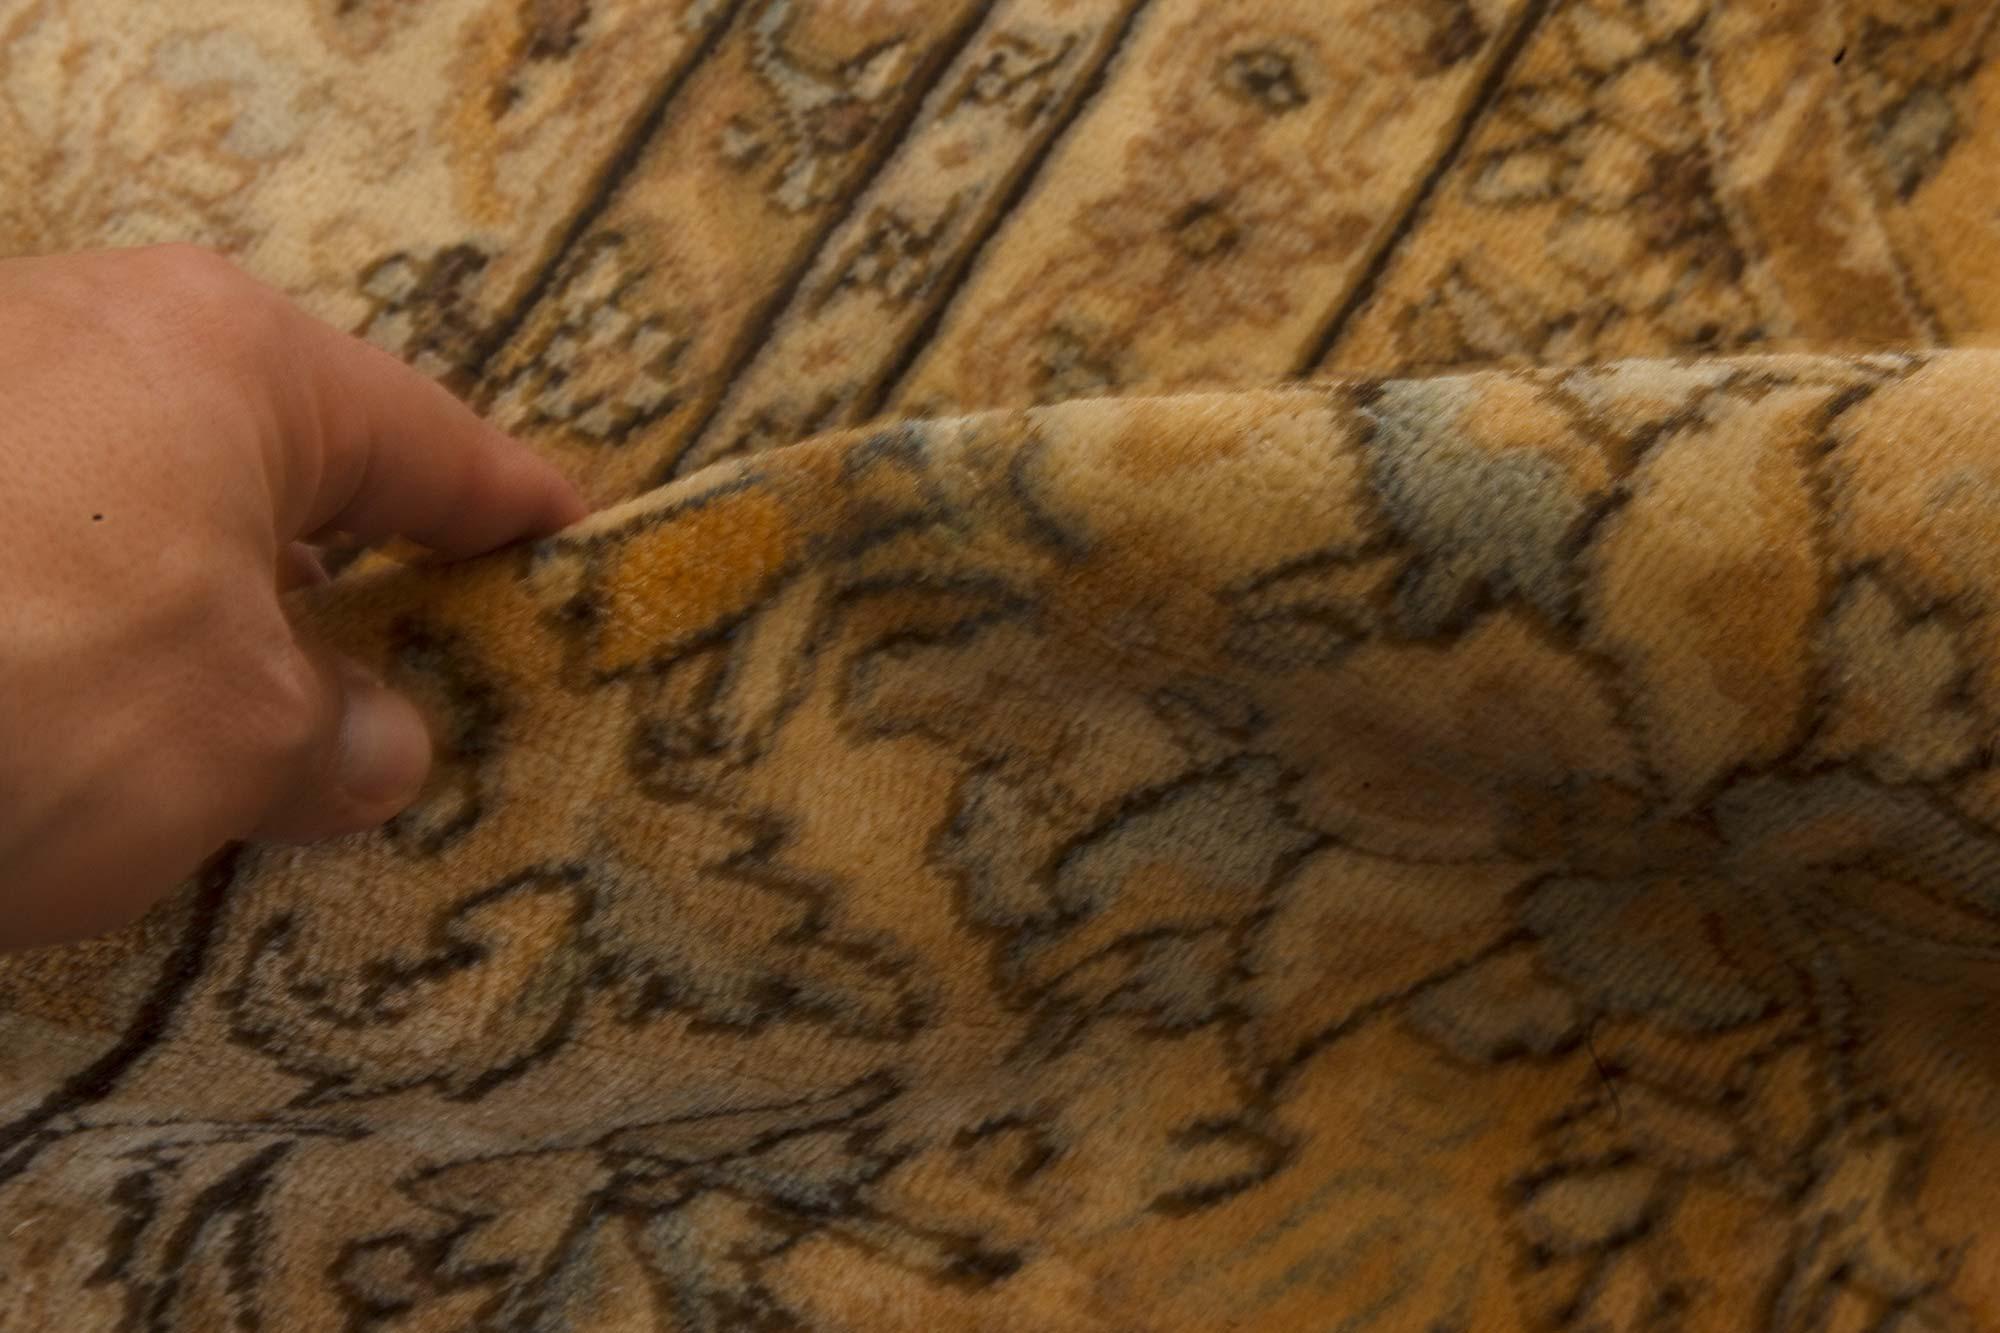 Authentic 19th century Persian Kirman beige handmade wool carpet
Size: 9'7